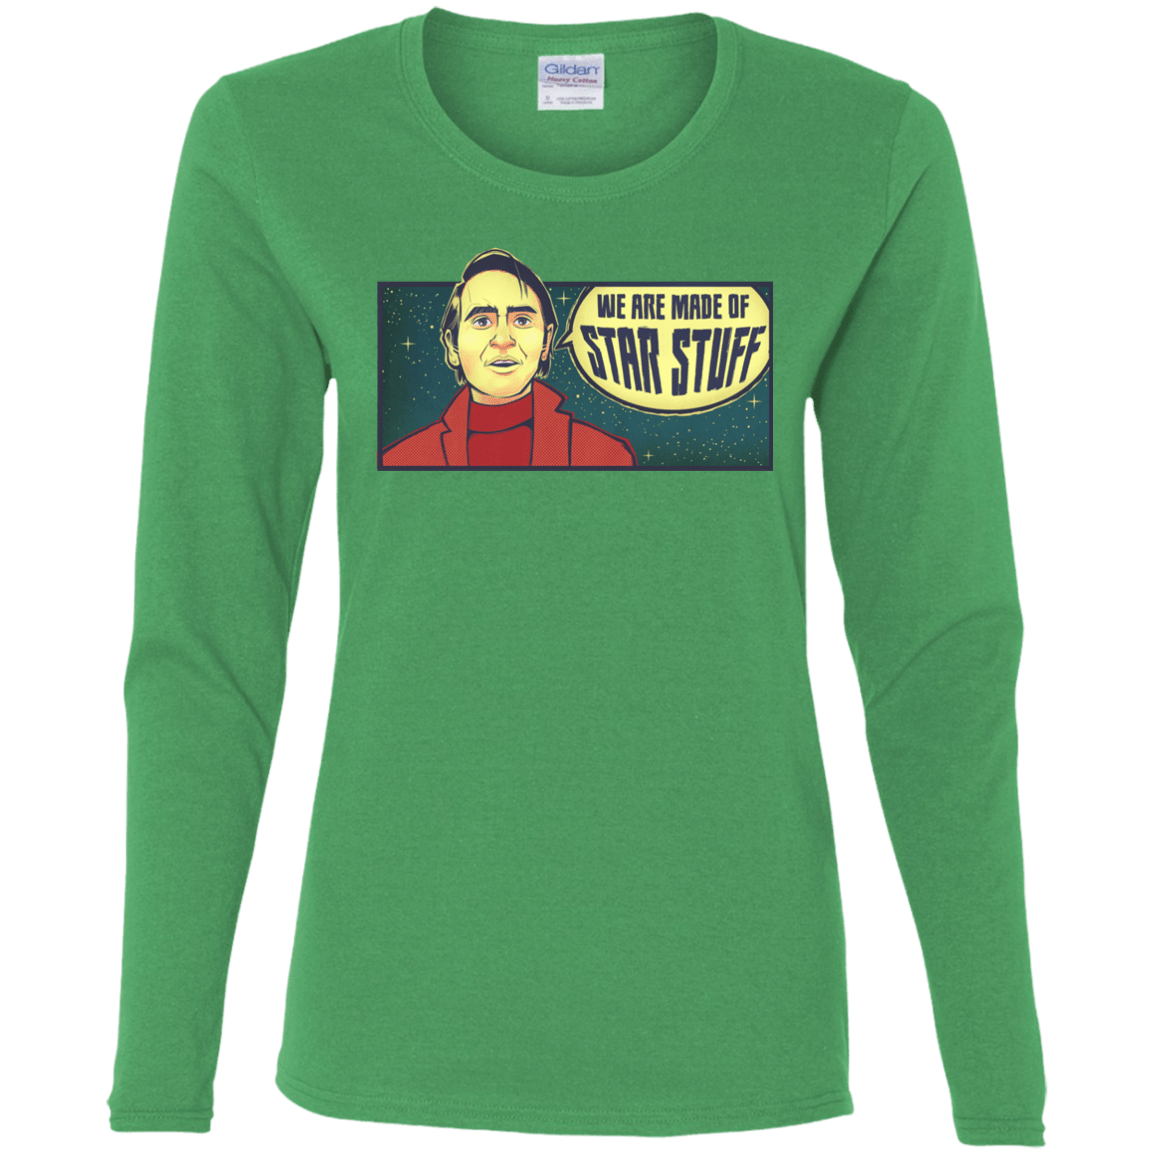 T-Shirts Irish Green / S SAGAN Star Stuff Women's Long Sleeve T-Shirt